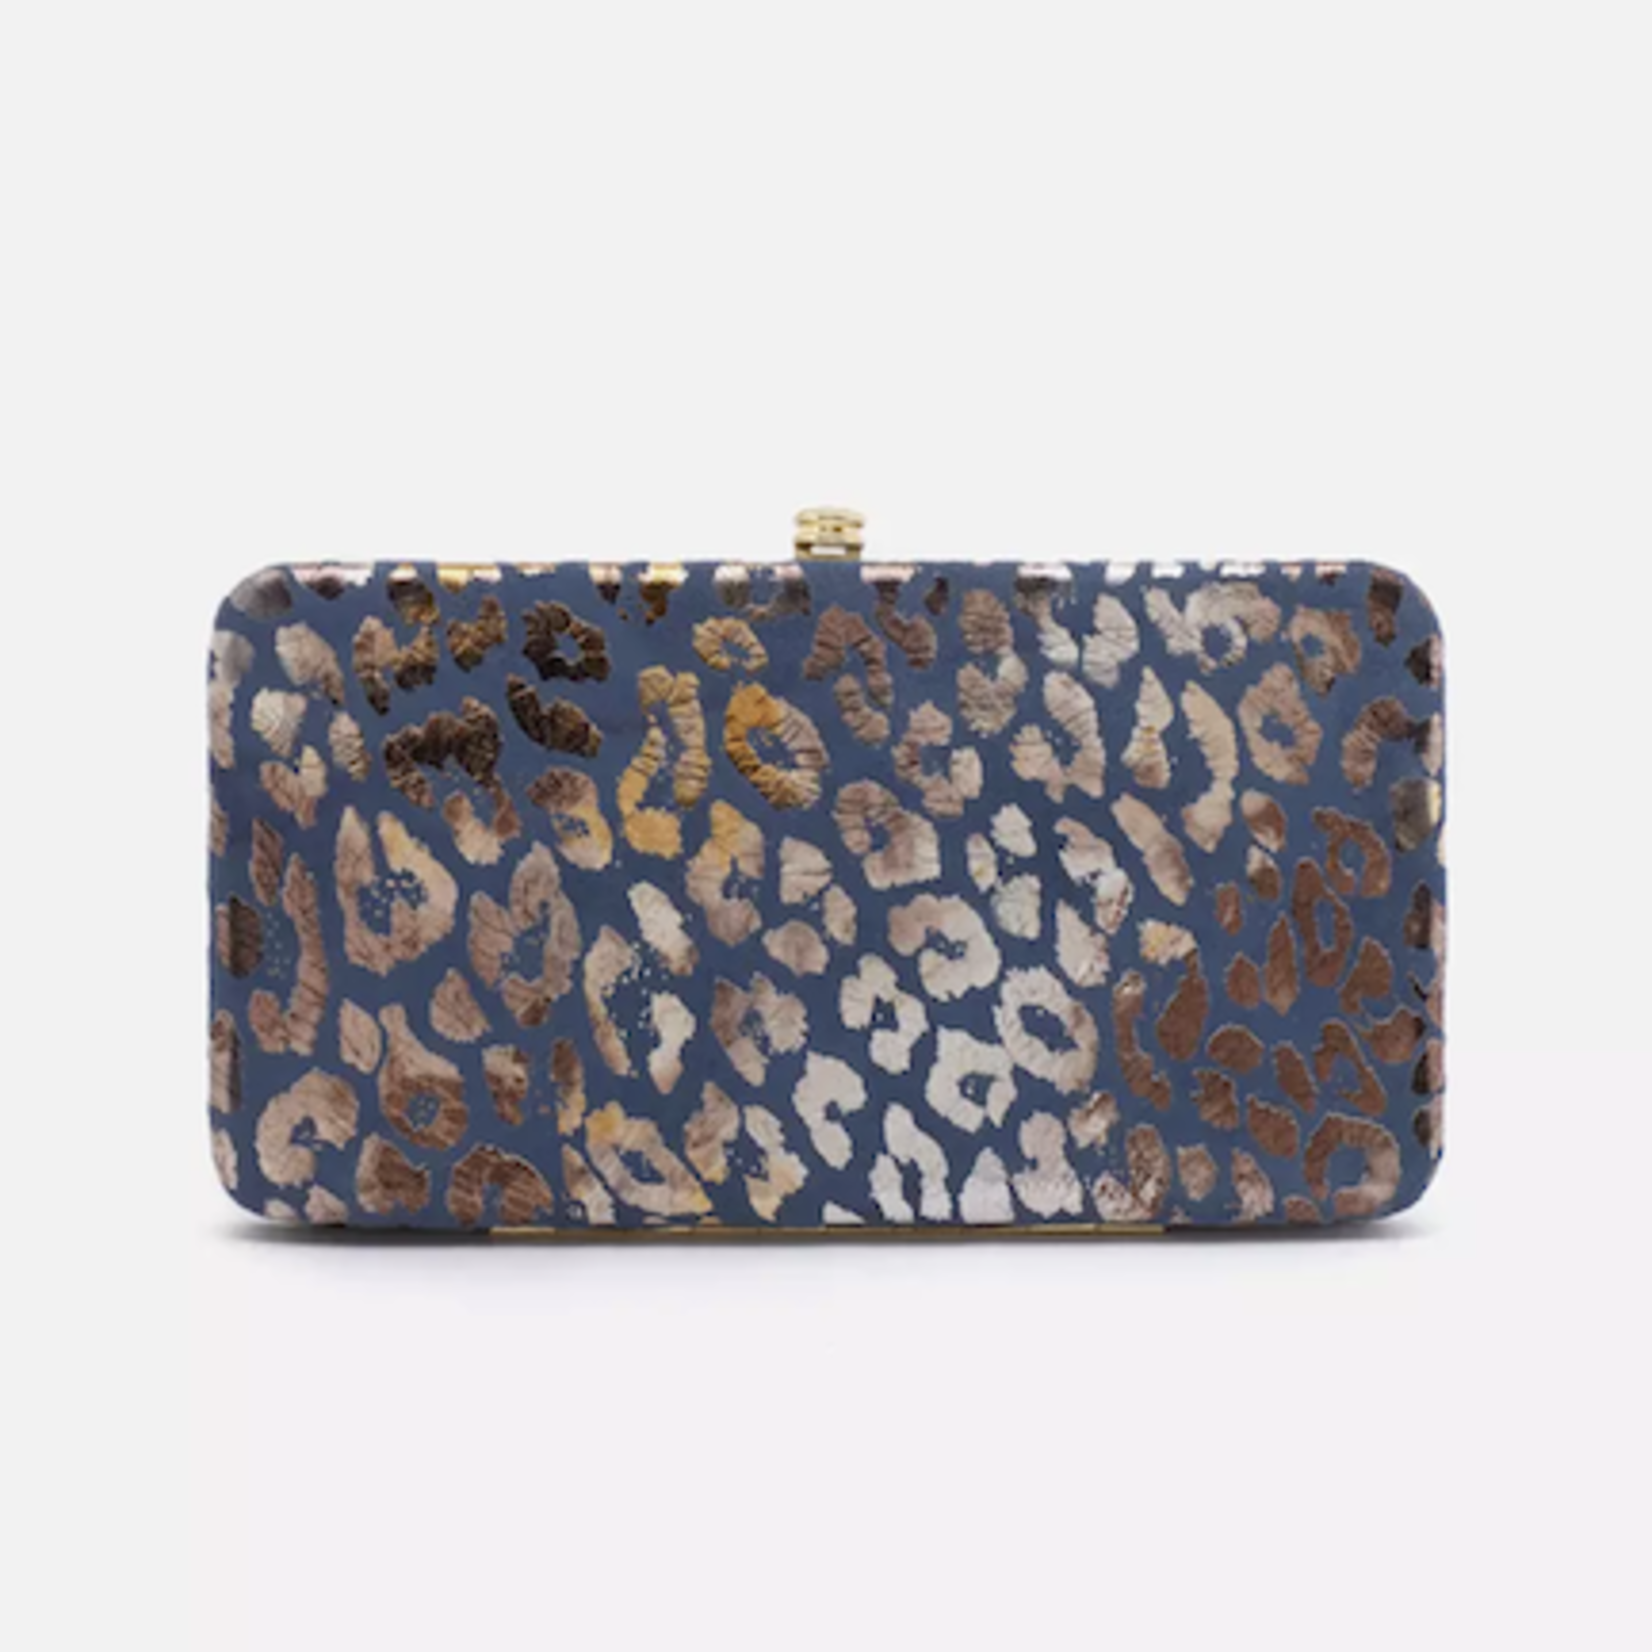 HOBO HOBO - Mia Minaudiere Wallet Mirror Cheetah Printed Leather